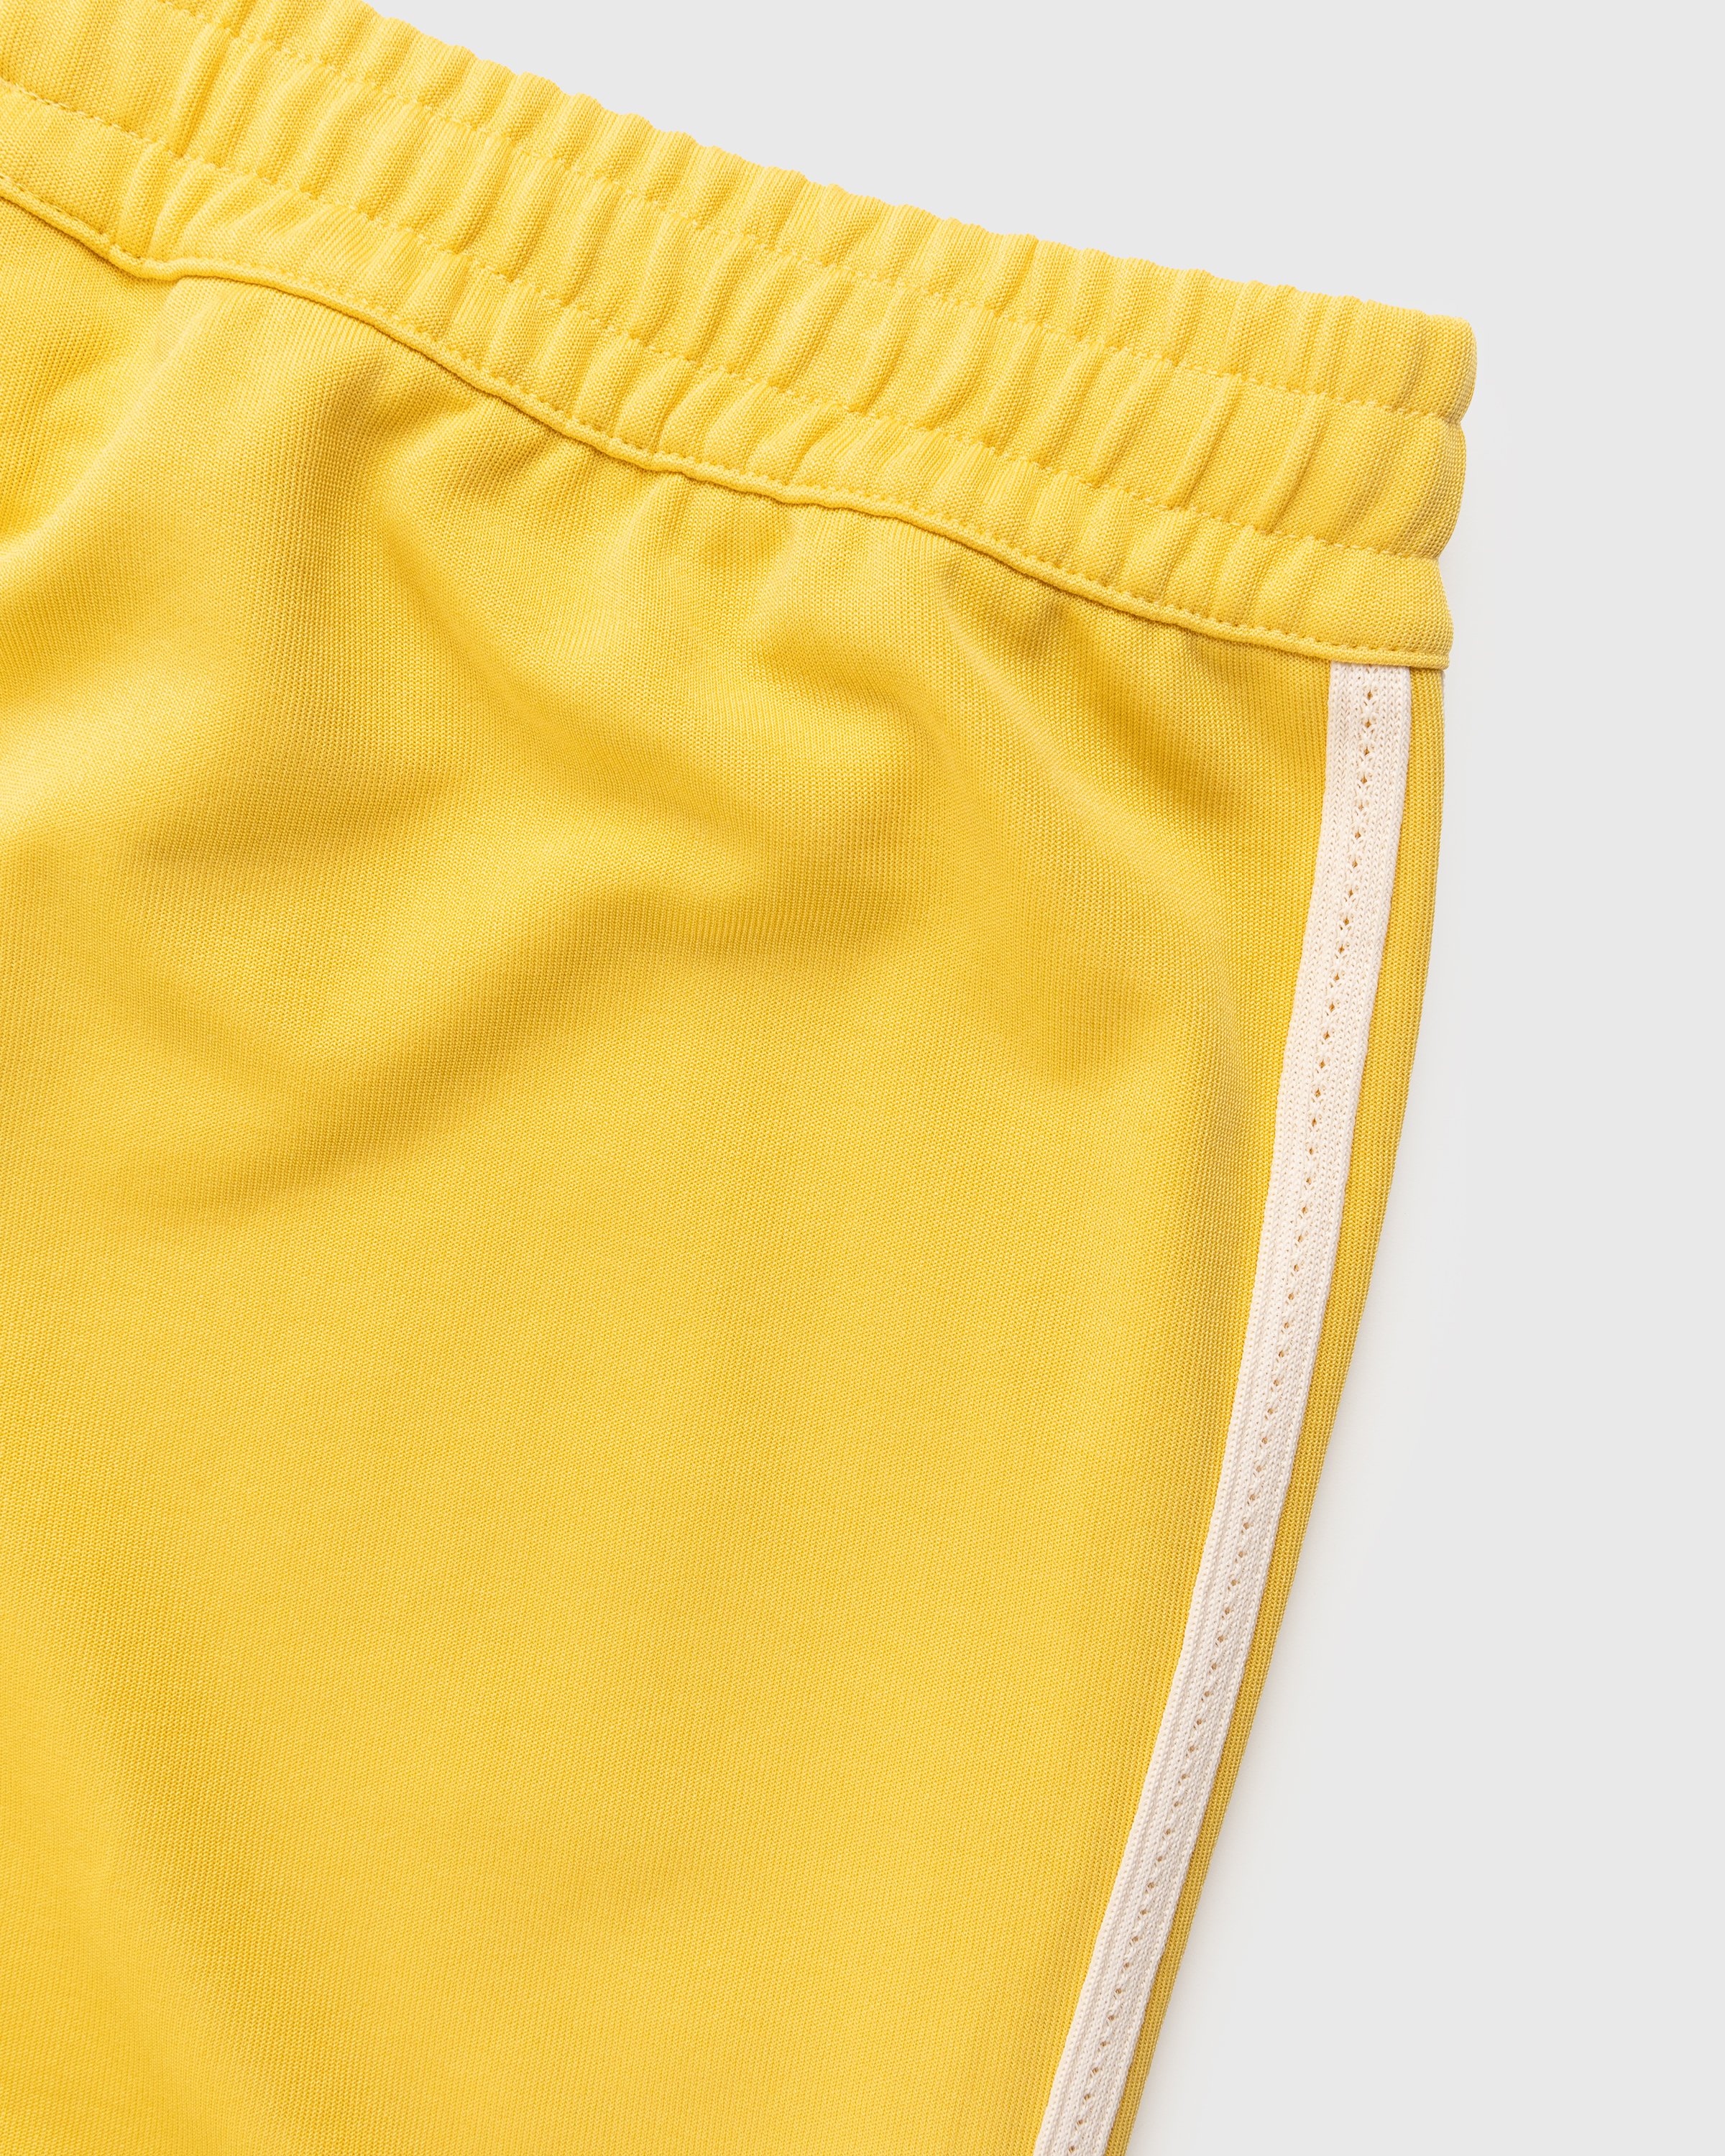 Adidas x Wales Bonner - WB Track Pants St Fade Gold - Clothing - Yellow - Image 4